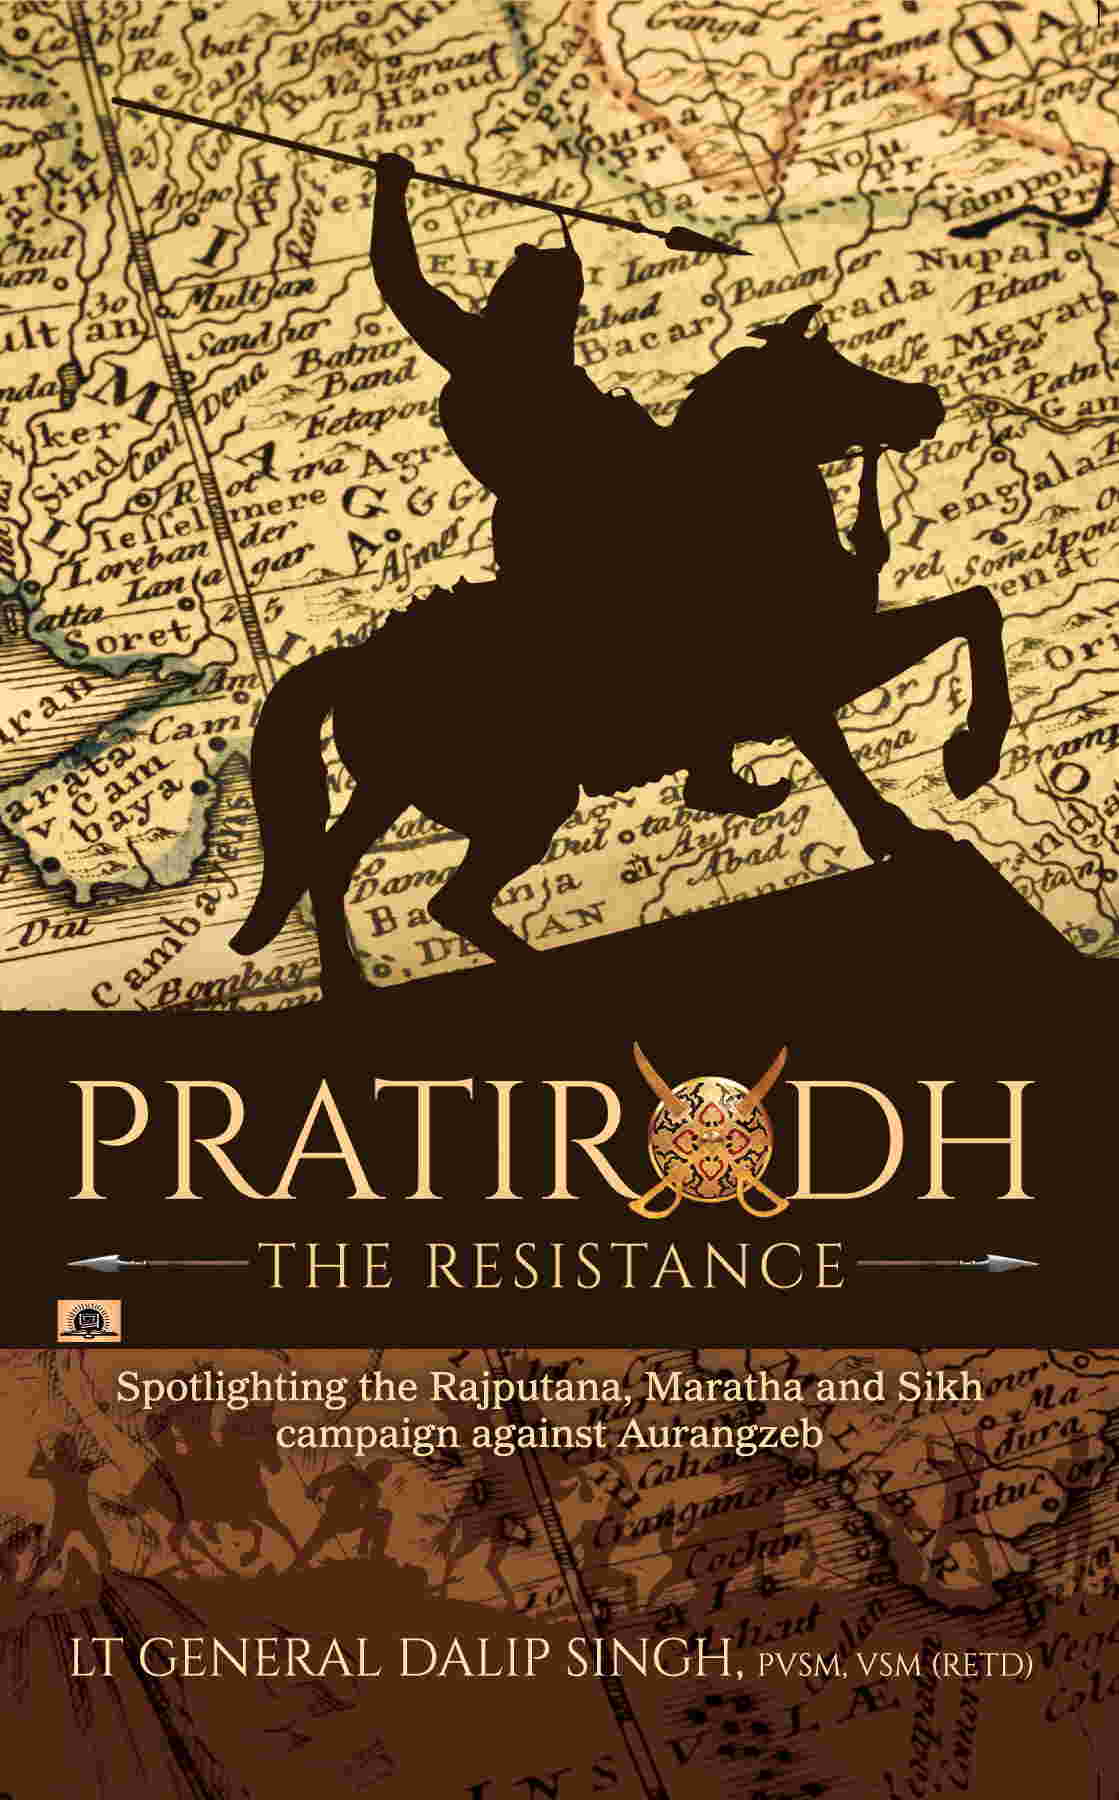 Pratirodh: The Resistance—Spotlighting the Rajputana, Maratha and Sikh campaign against Aurangzeb